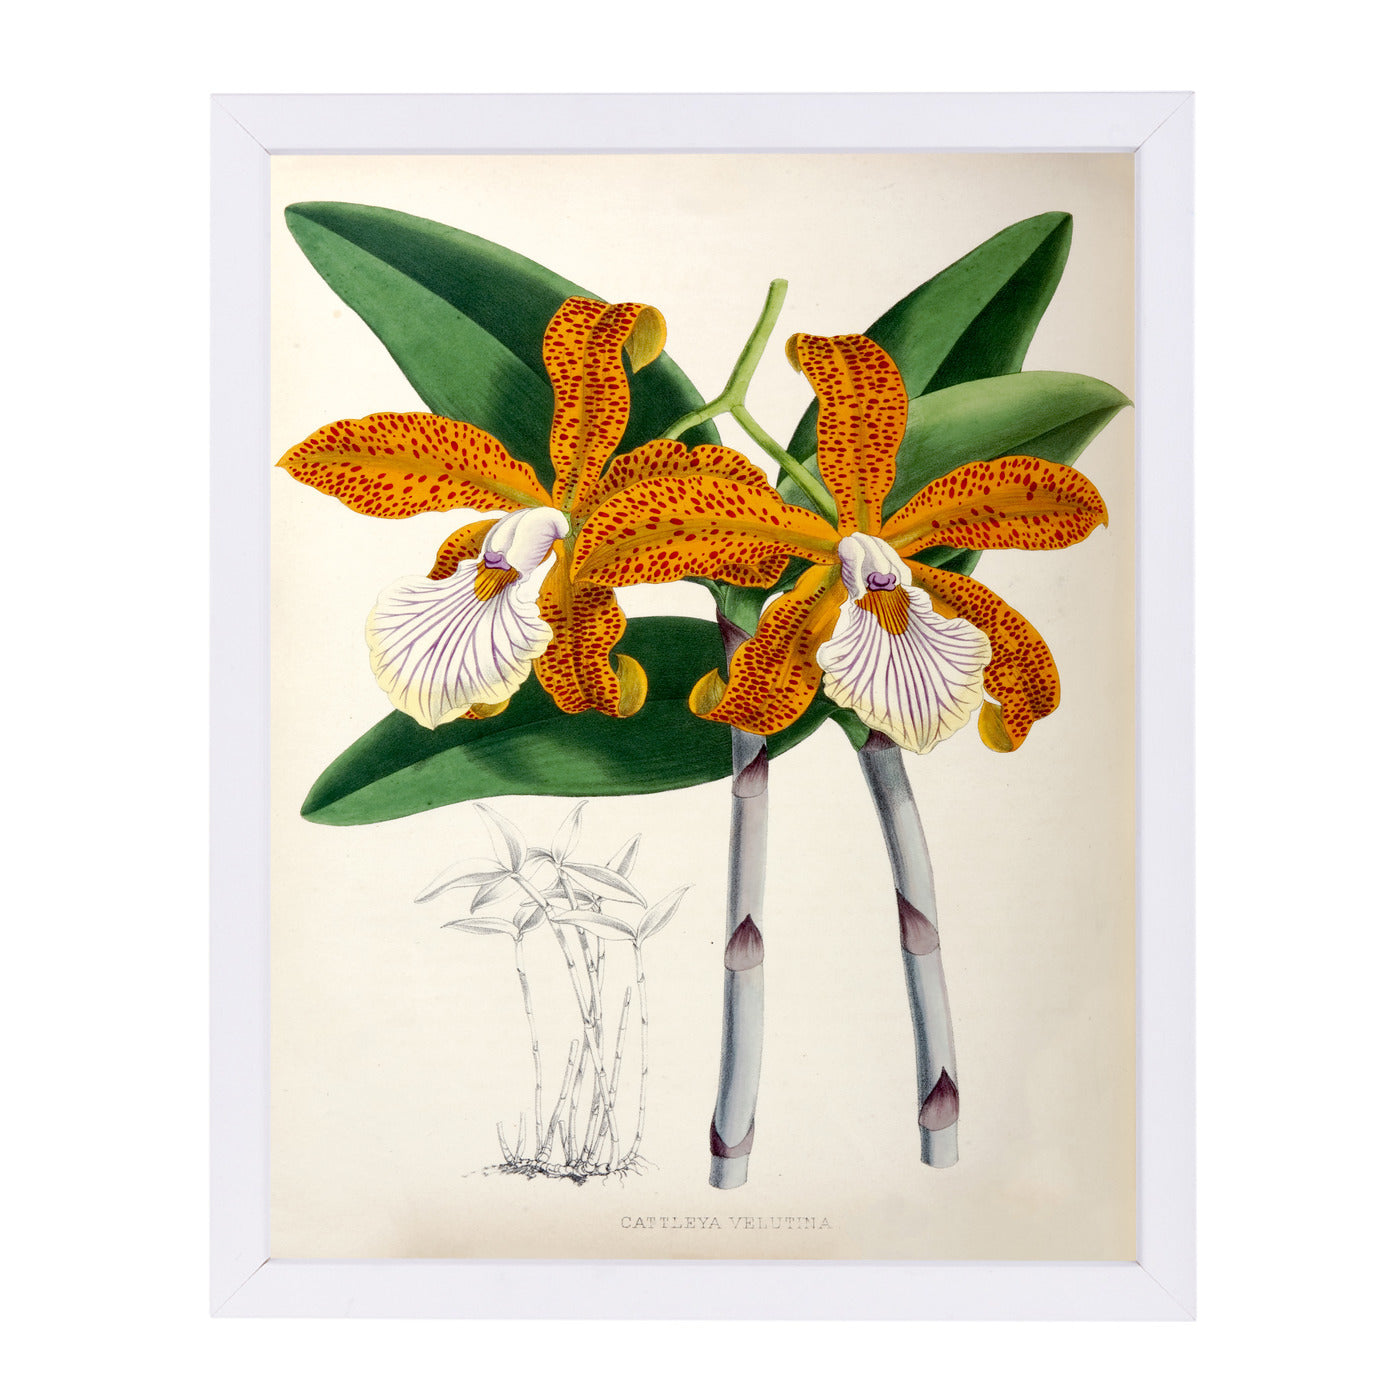 Fitch Orchid Cattleya Velutina by New York Botanical Garden Framed Print - Americanflat